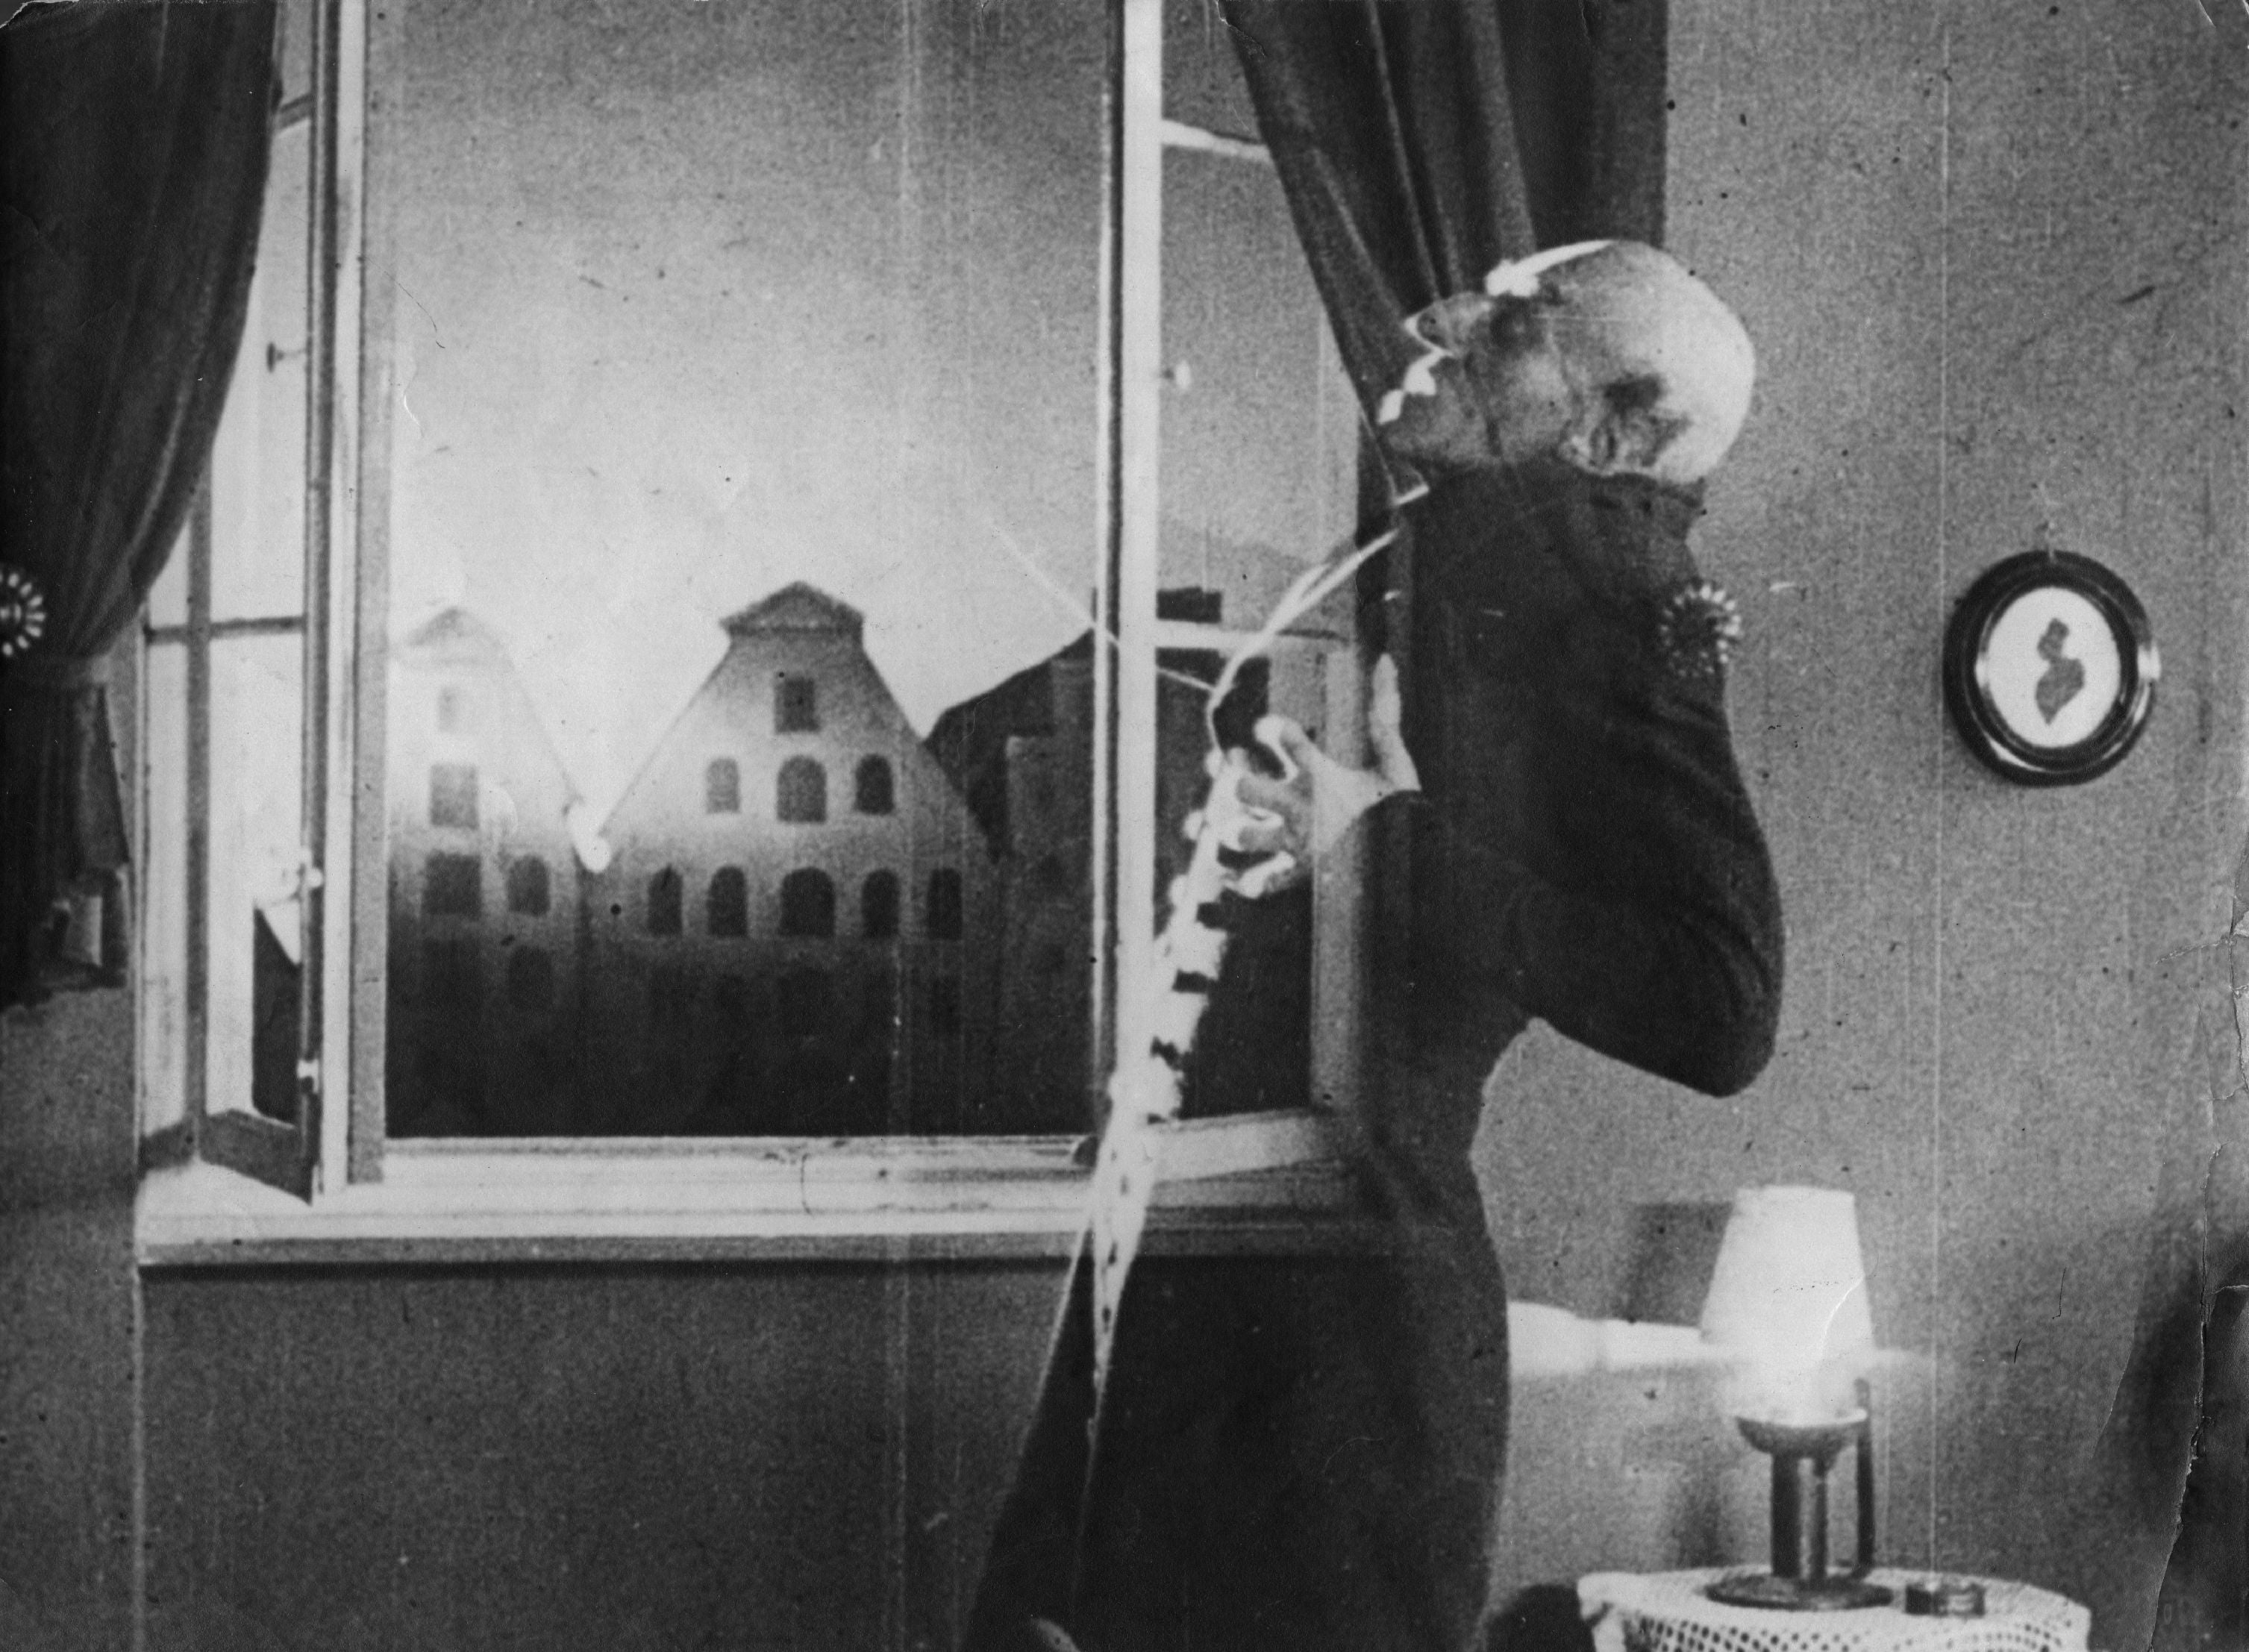 FW Murnau’s 1922 ‘Nosferatu’ starring Max Schreck was one of the earliest ‘Dracula’ adaptations